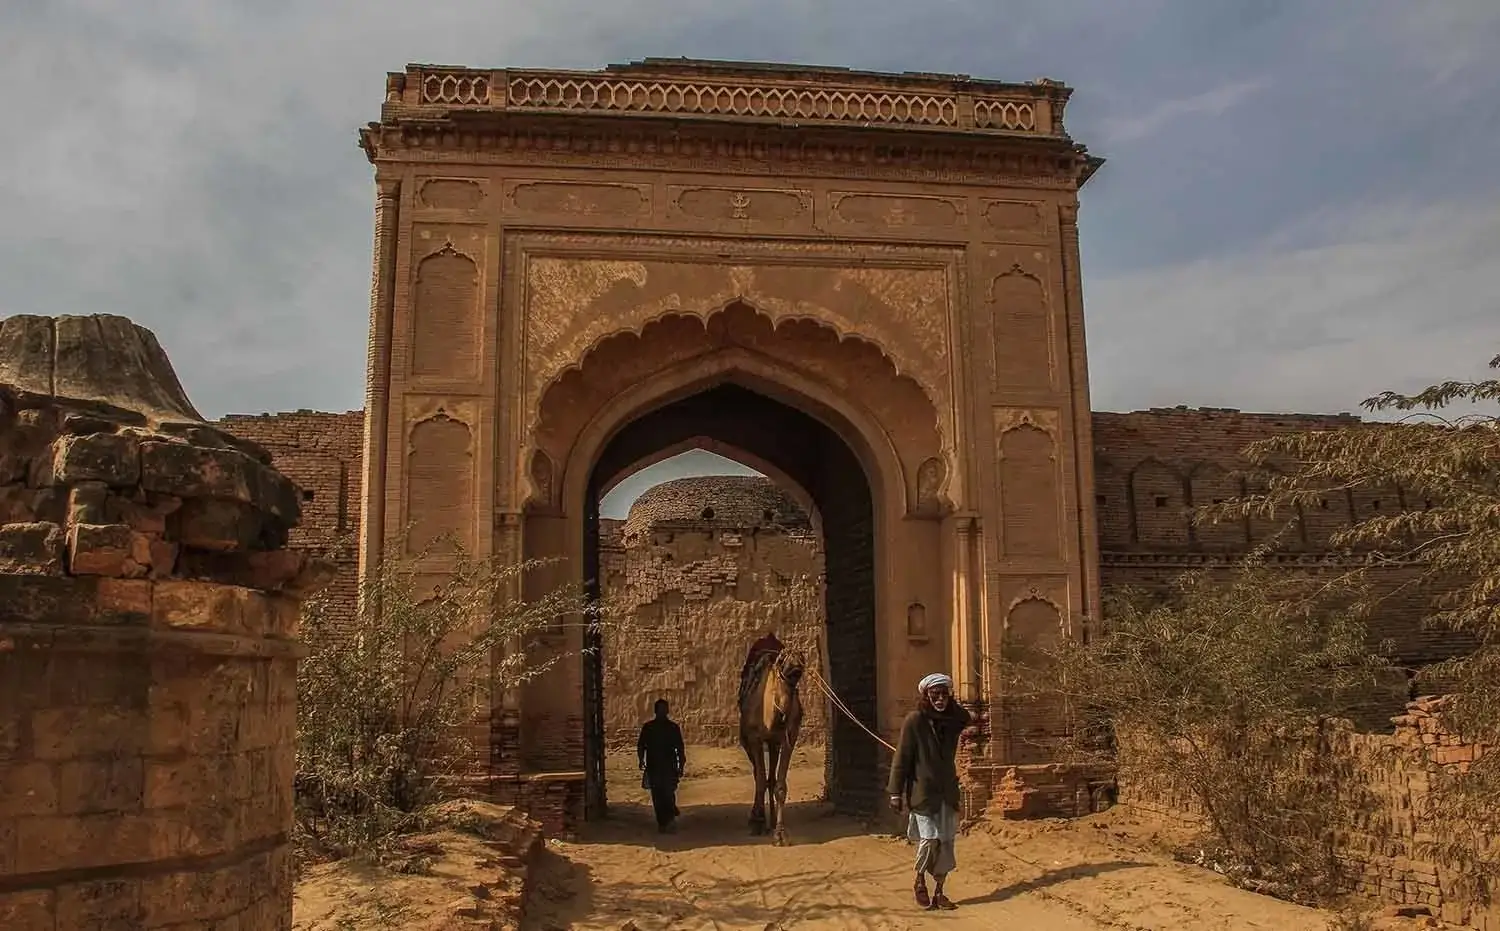 derawar-fort-bahawalpur-pakistan-9th-century-v0-b8p4zstx8asb1.jpg